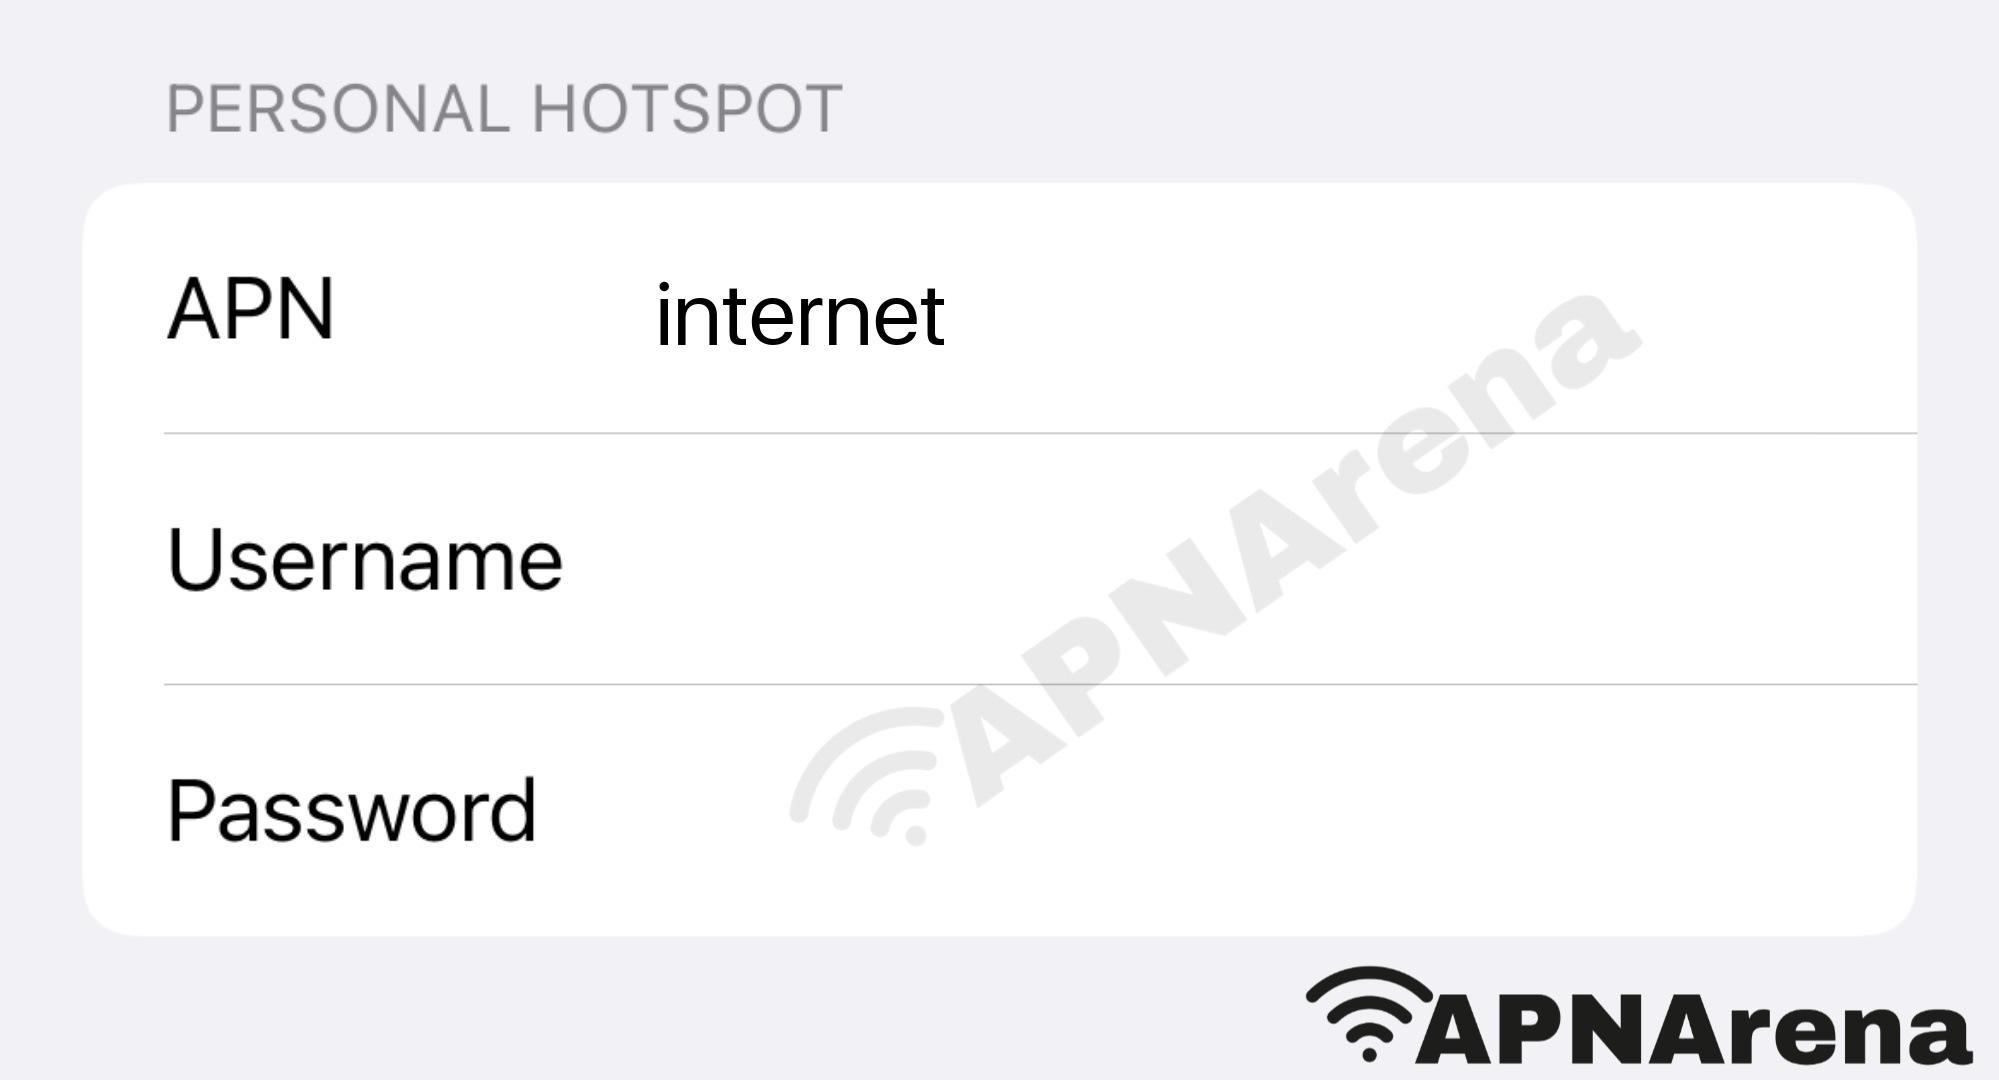 Vodafone Turkey (Telsim) Personal Hotspot Settings for iPhone